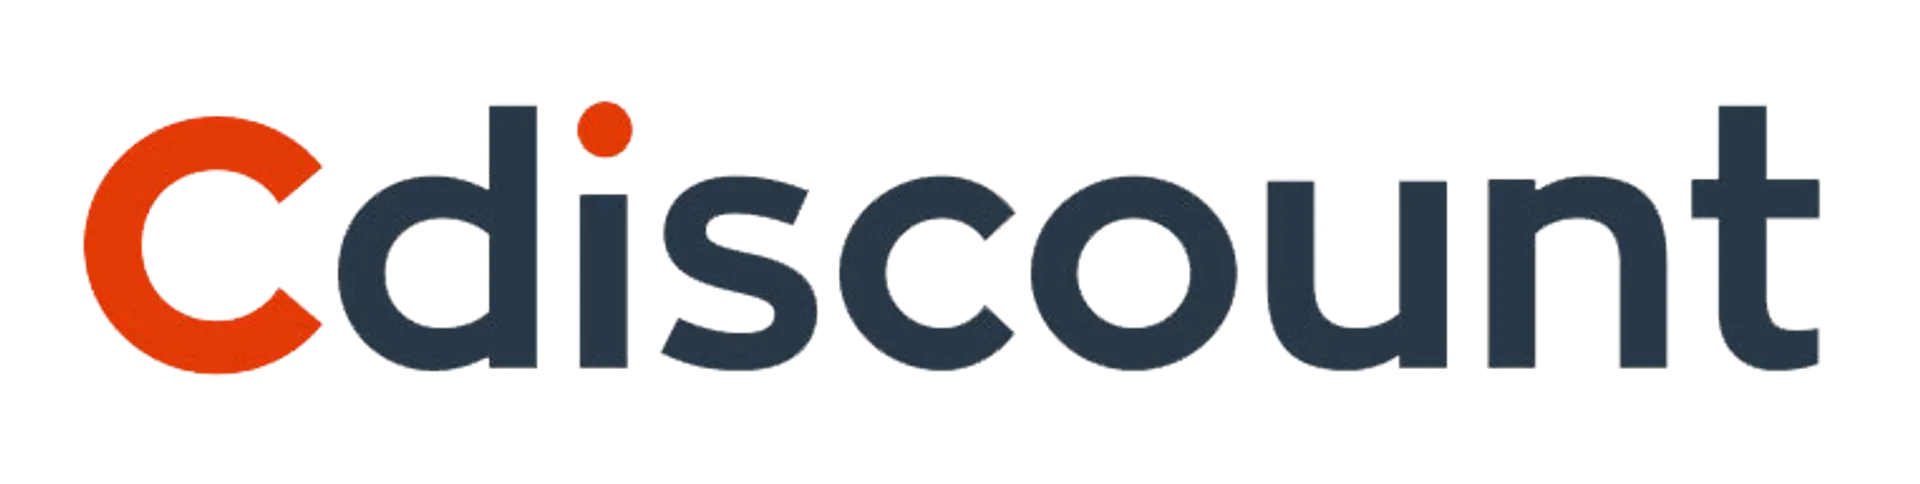 CDISCOUNT logo